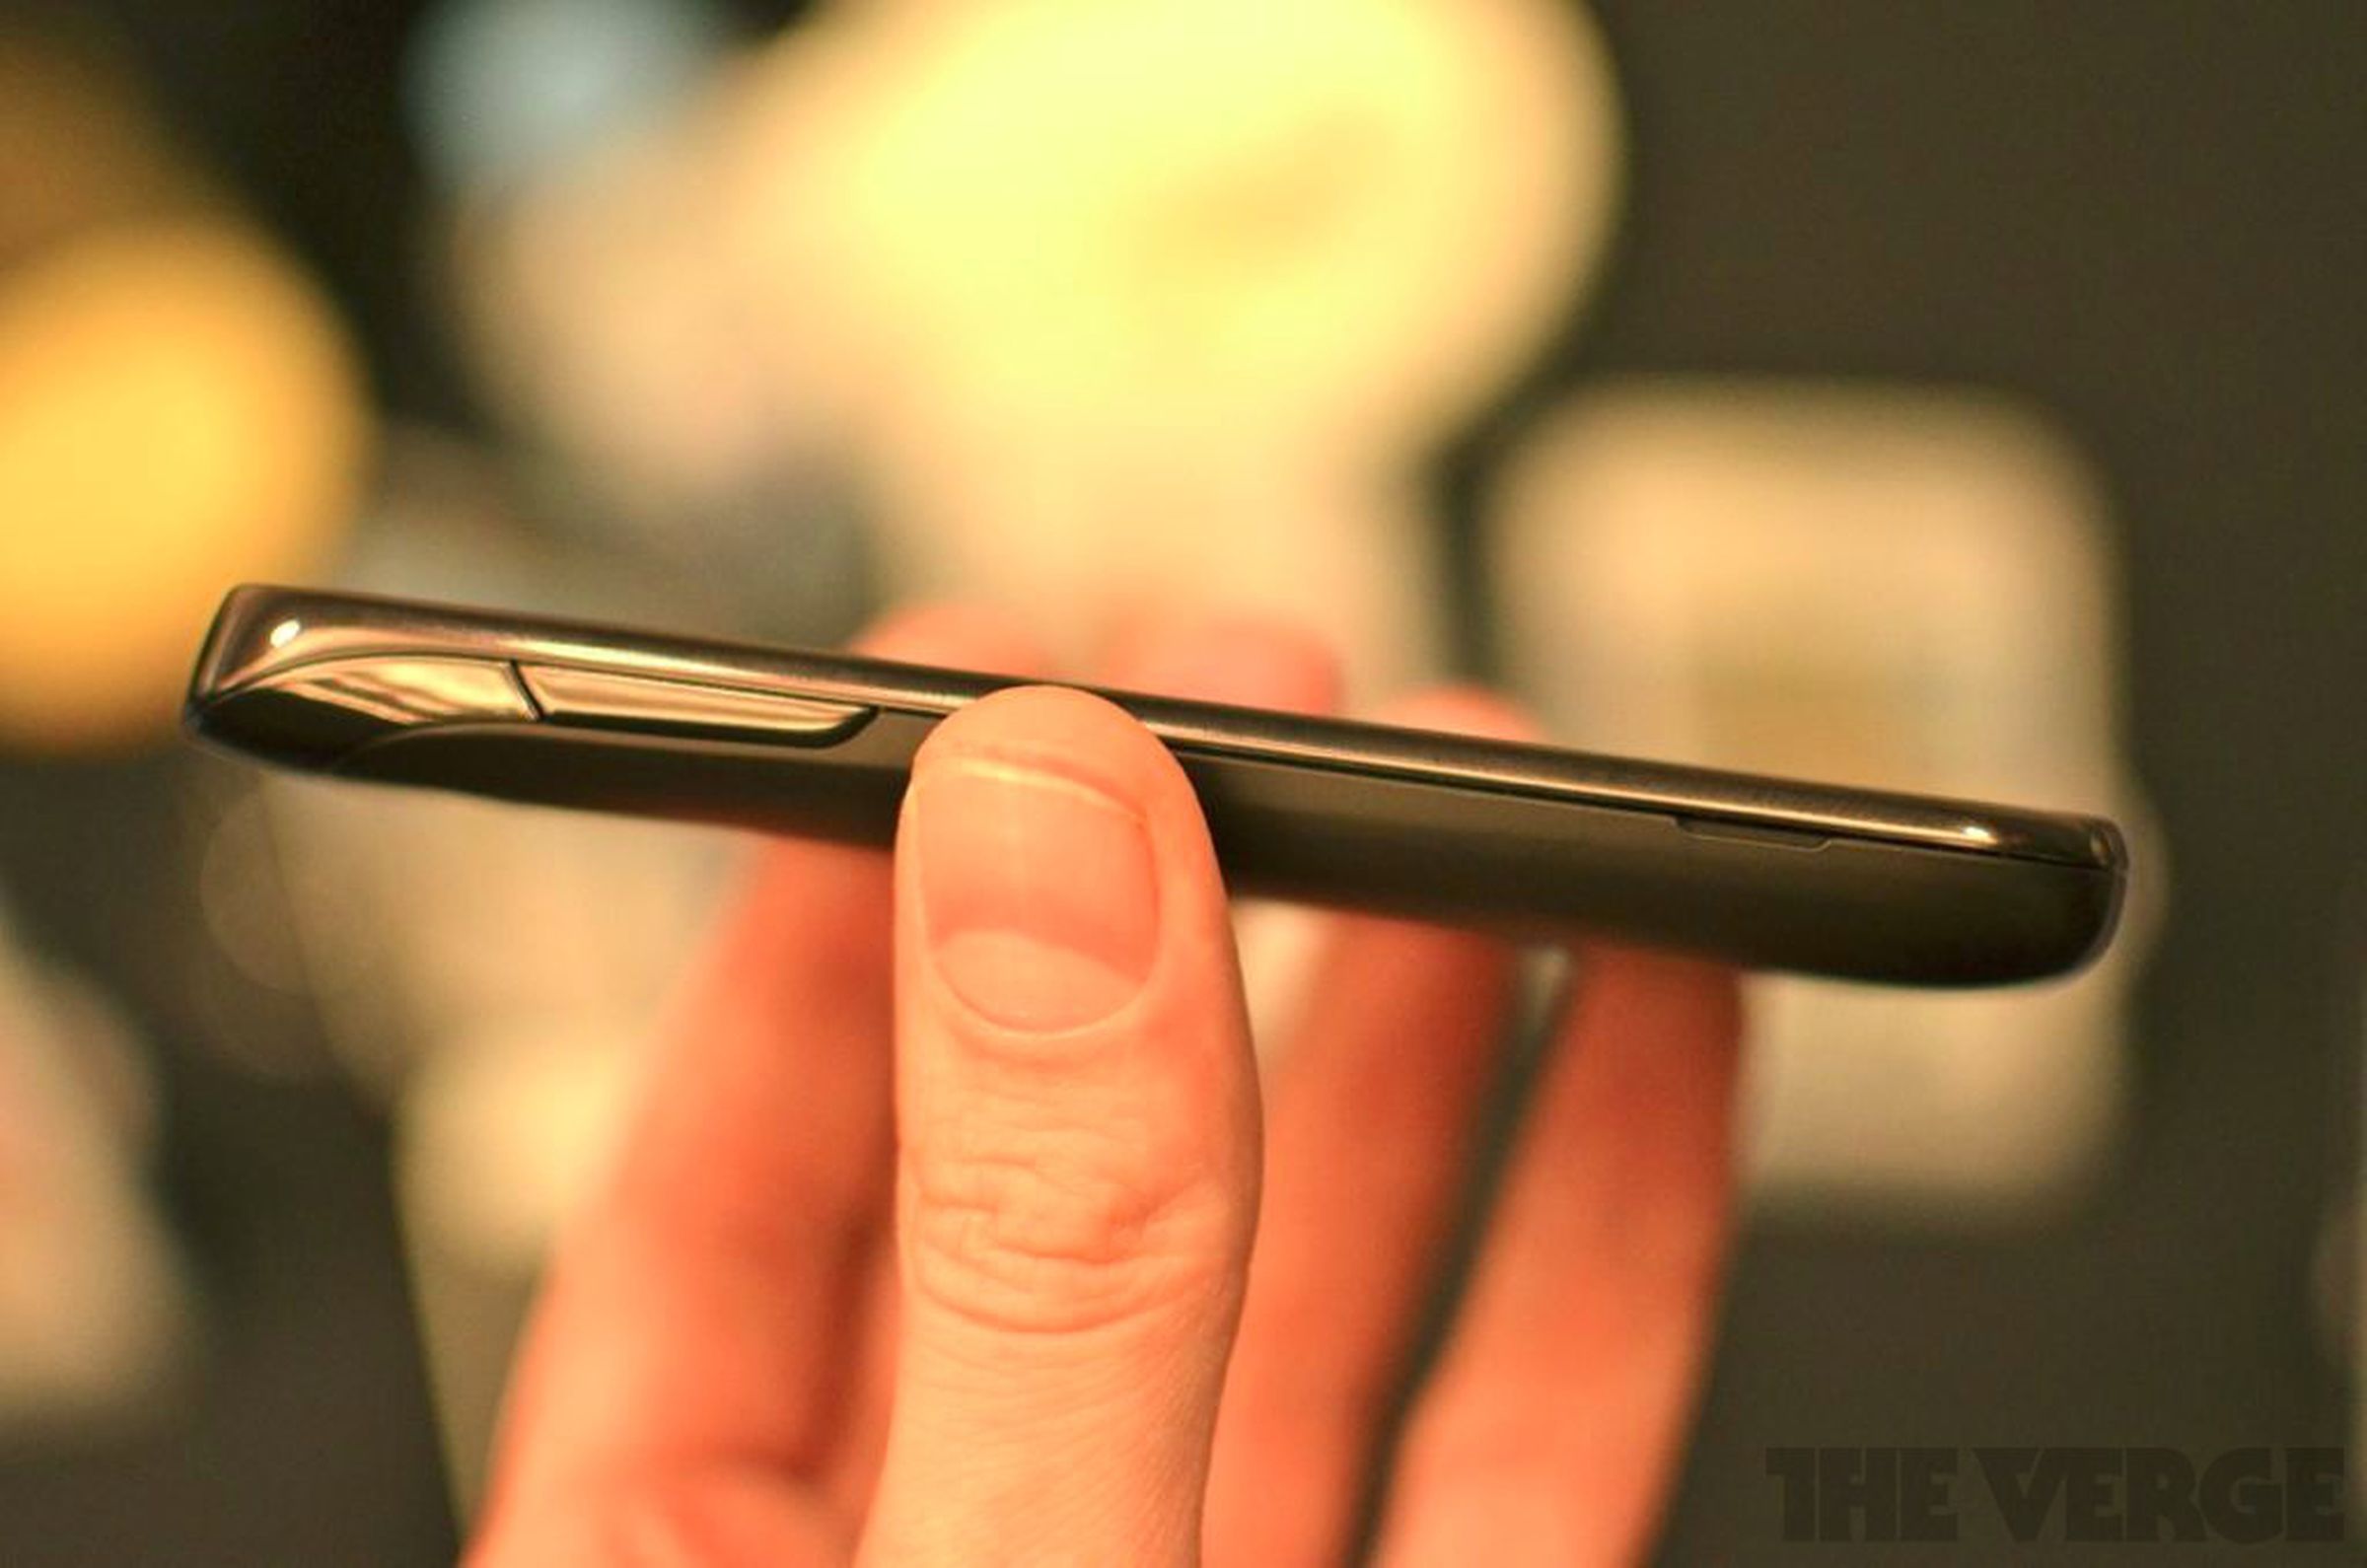 Galaxy S Blaze 4G hands-on photos